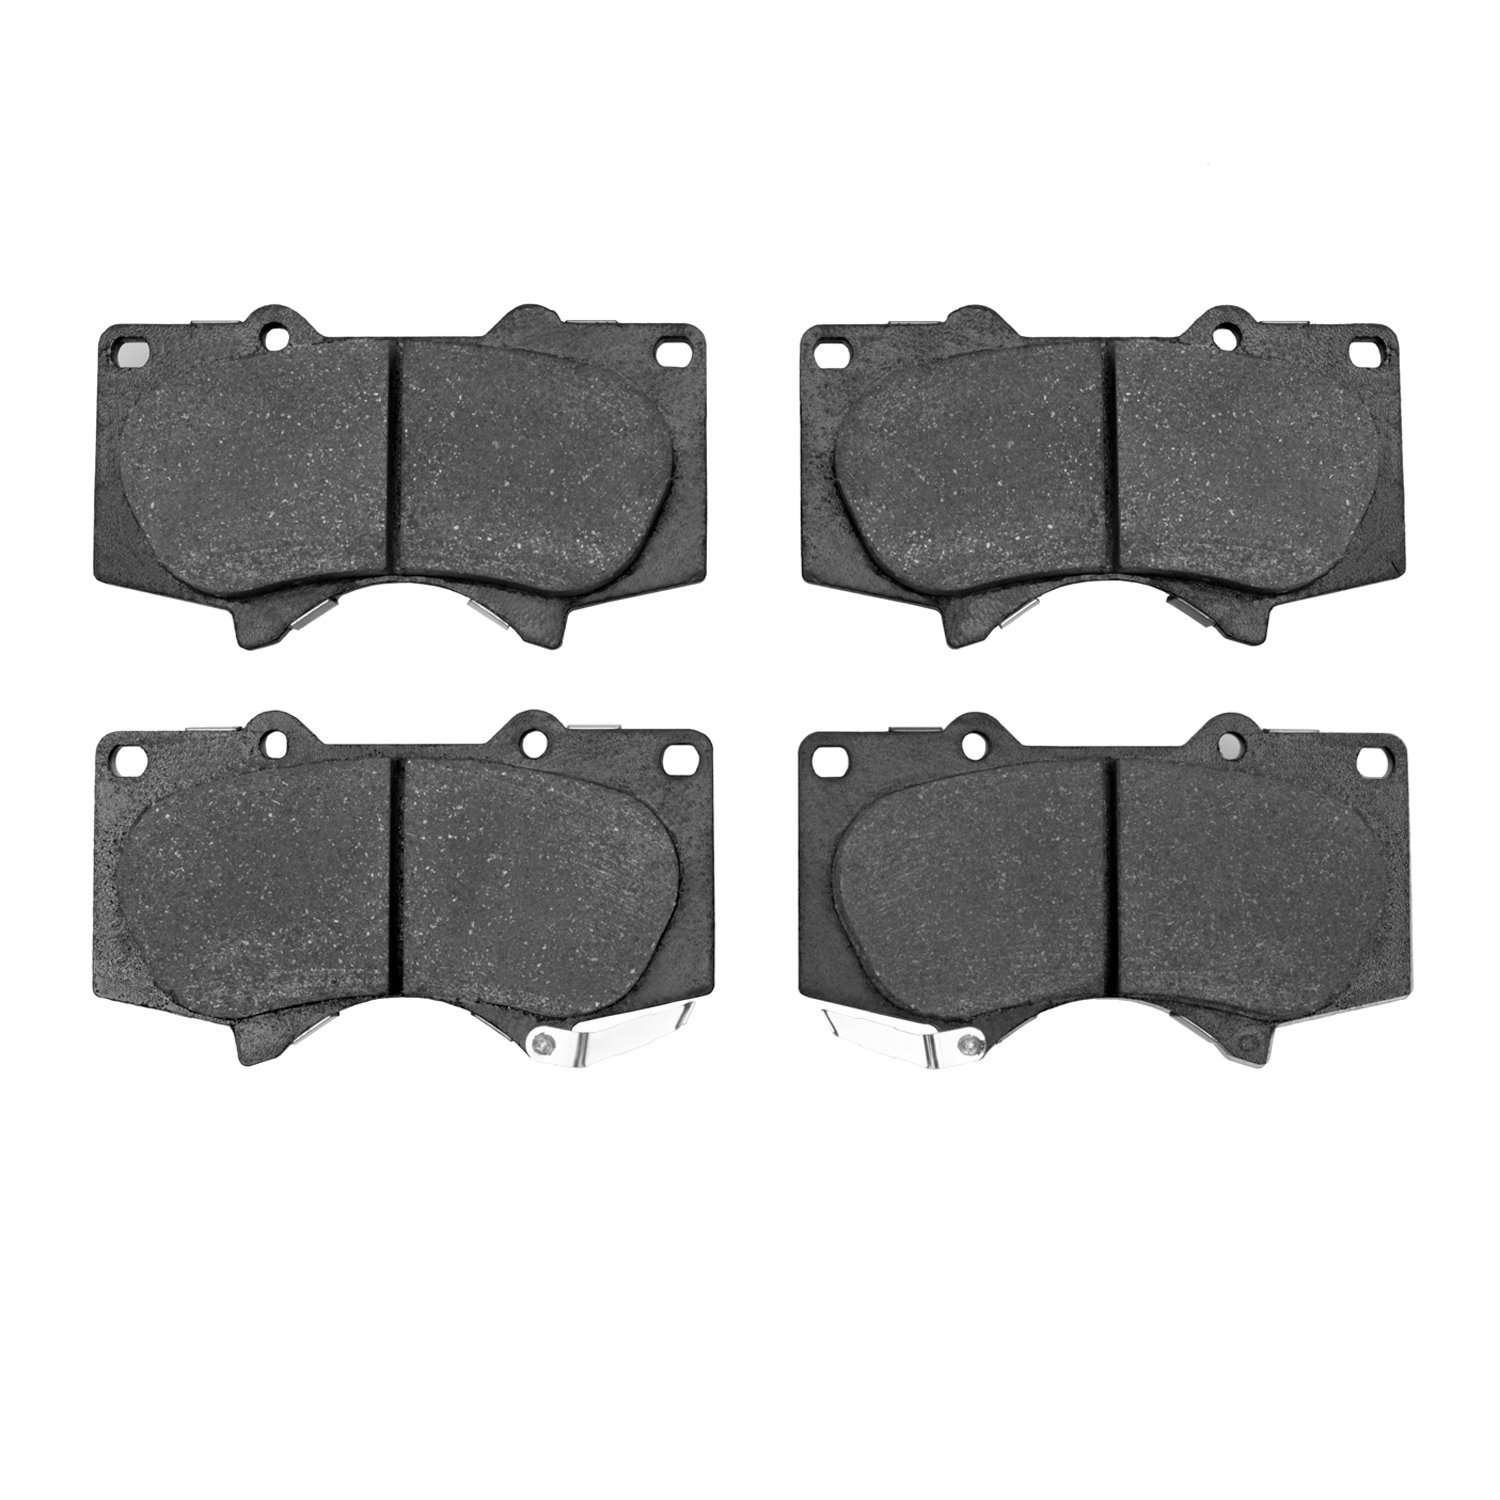 1551-0976-00 5000 Advanced Ceramic Brake Pads, Fits Select Multiple Makes/Models, Position: Front